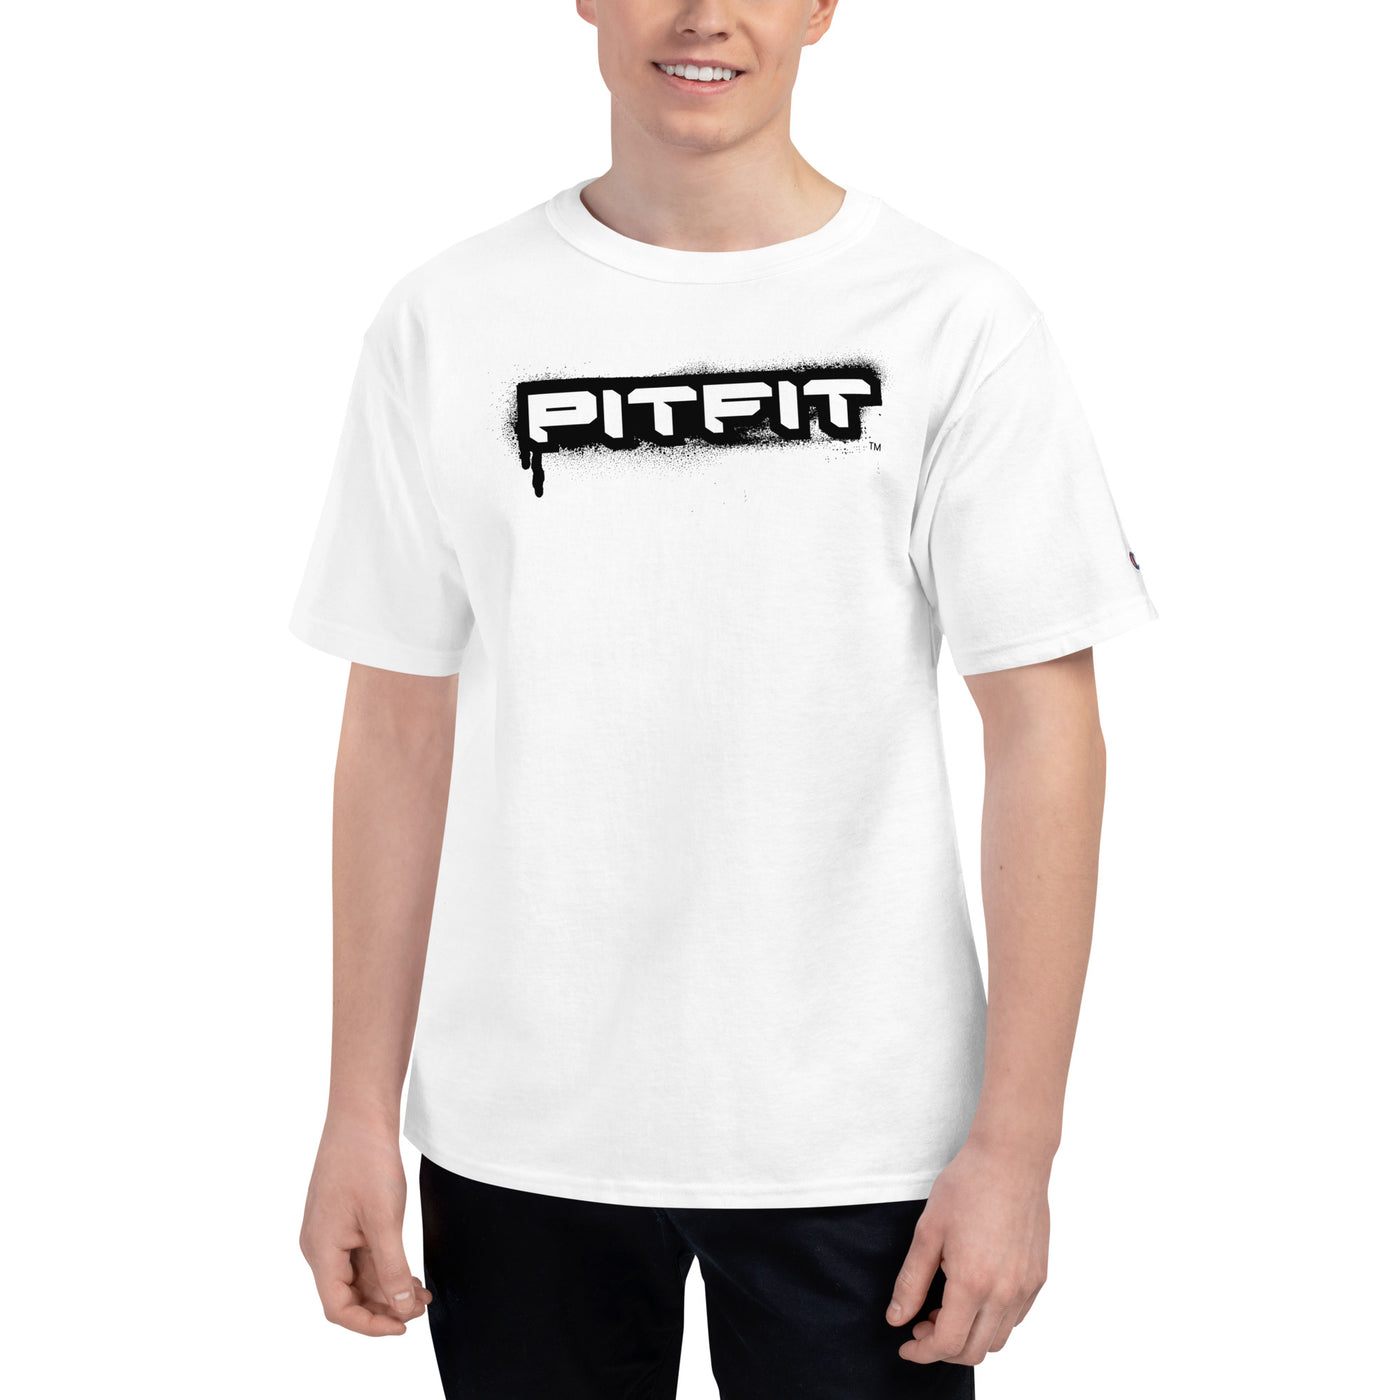 PITFIT White Champion T-Shirt